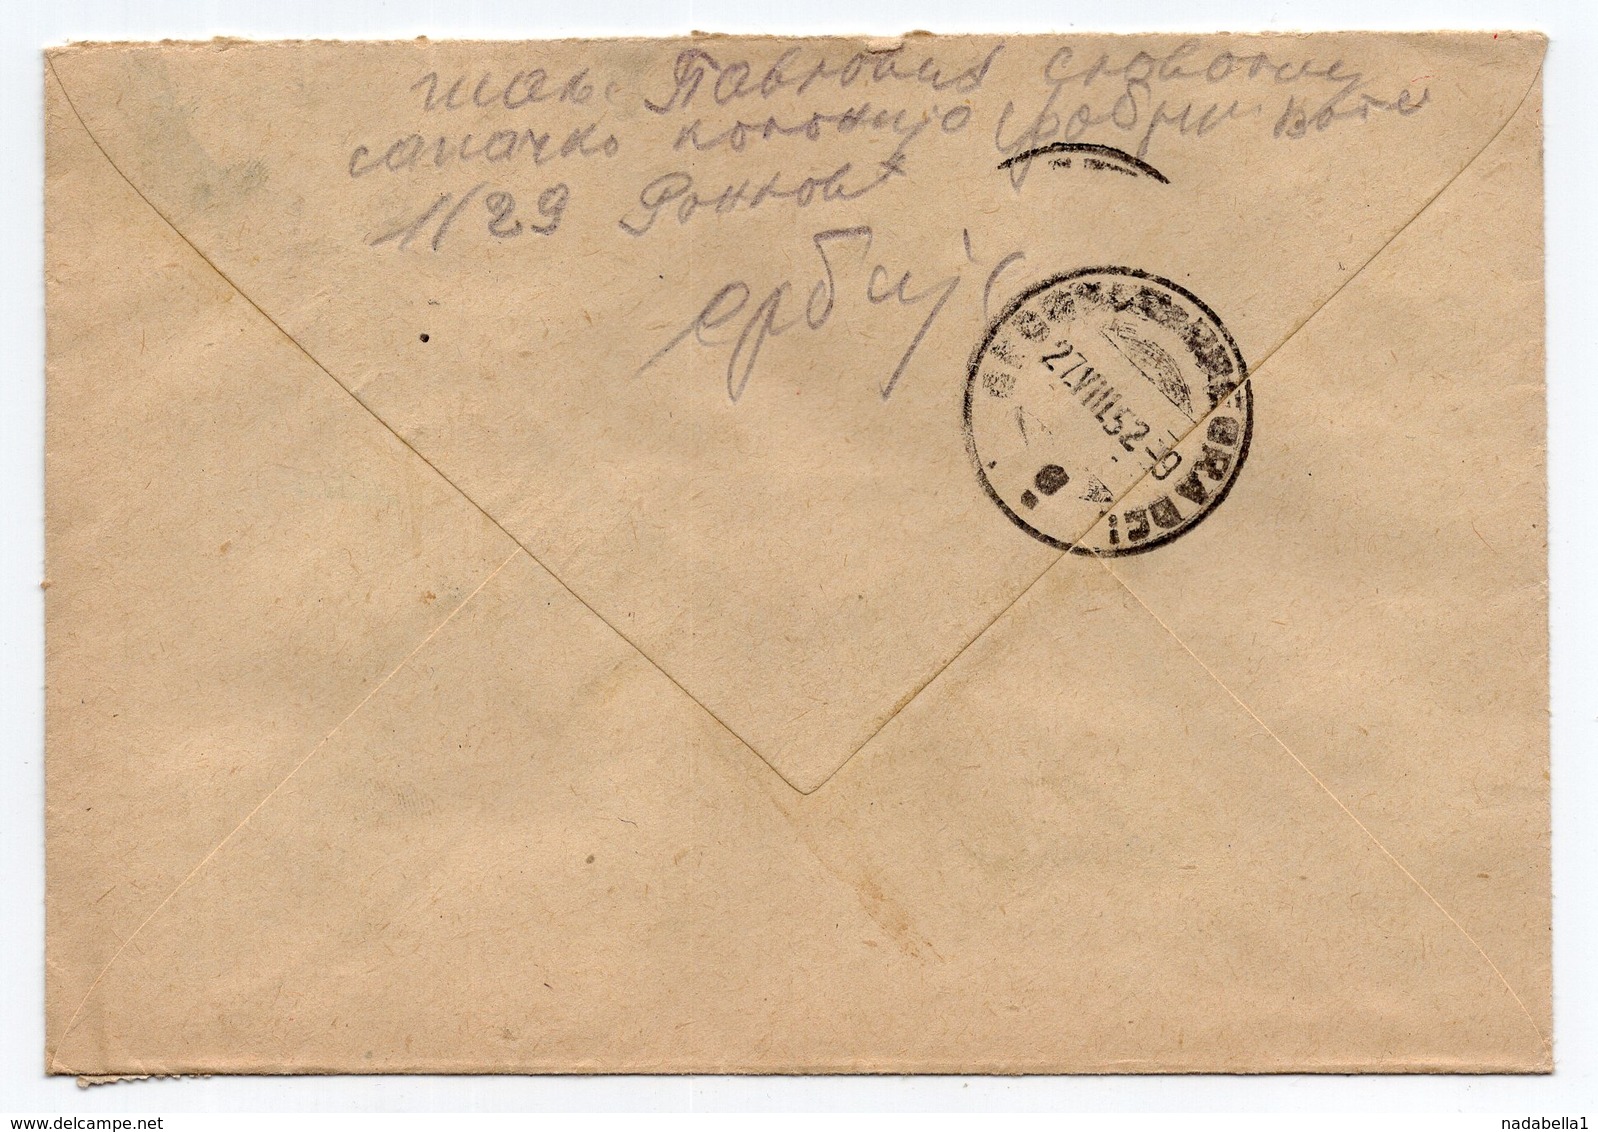 1952 YUGOSLAVIA, SERBIA, KRALJEVO, RANKOVICEVO TO BELGRADE, REGISTERED MAIL, STATIONERY COVER - Postal Stationery